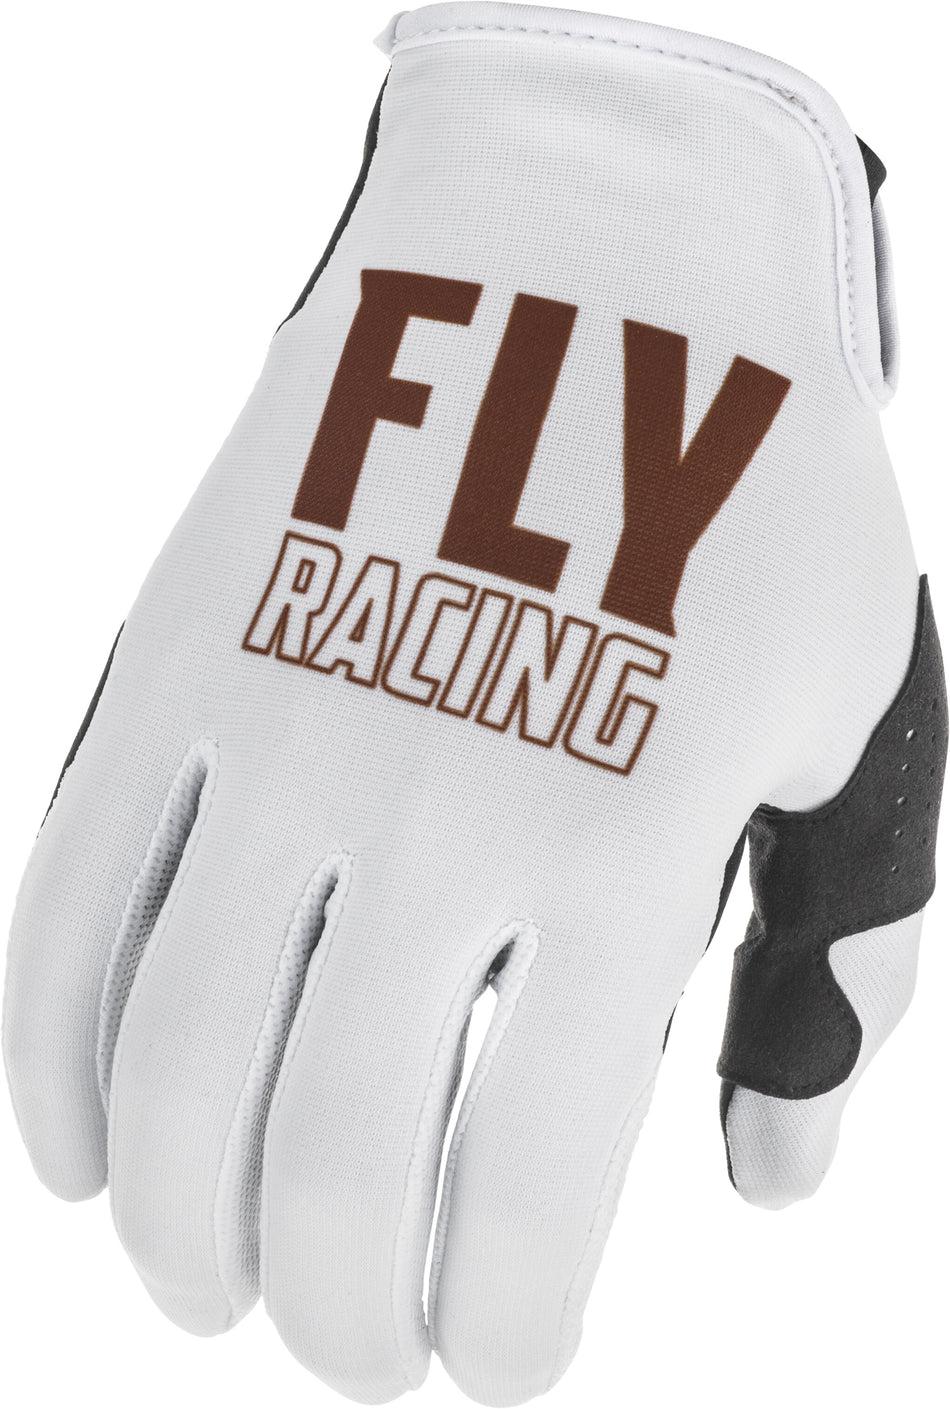 FLY RACING Lite L.E. Gloves White/Copper Sz 12 374-71912